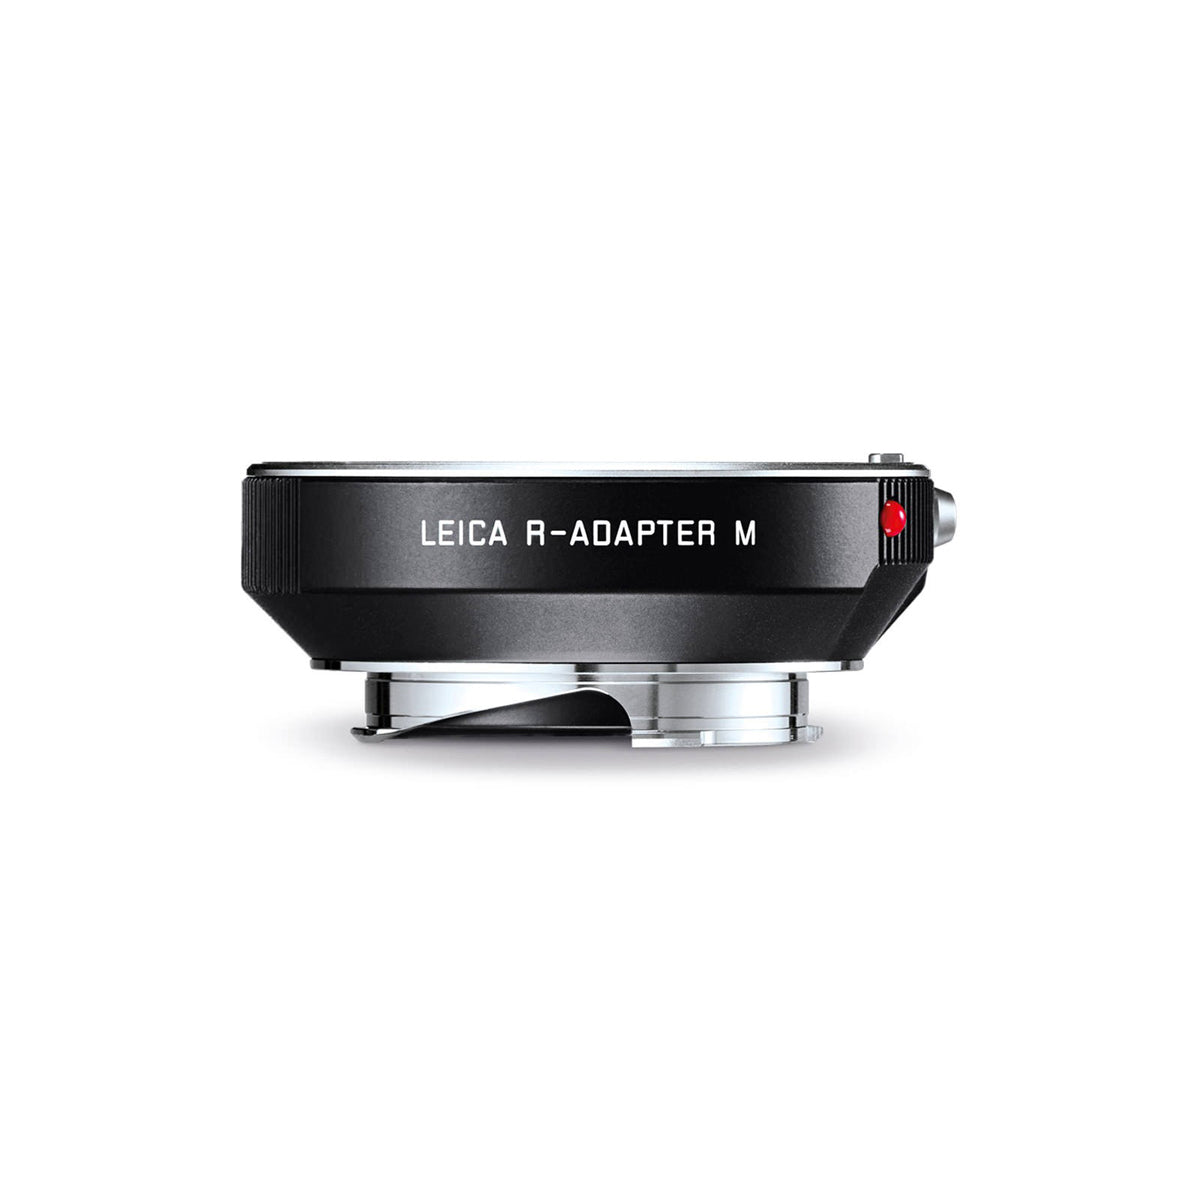 Leica R-Adapter M